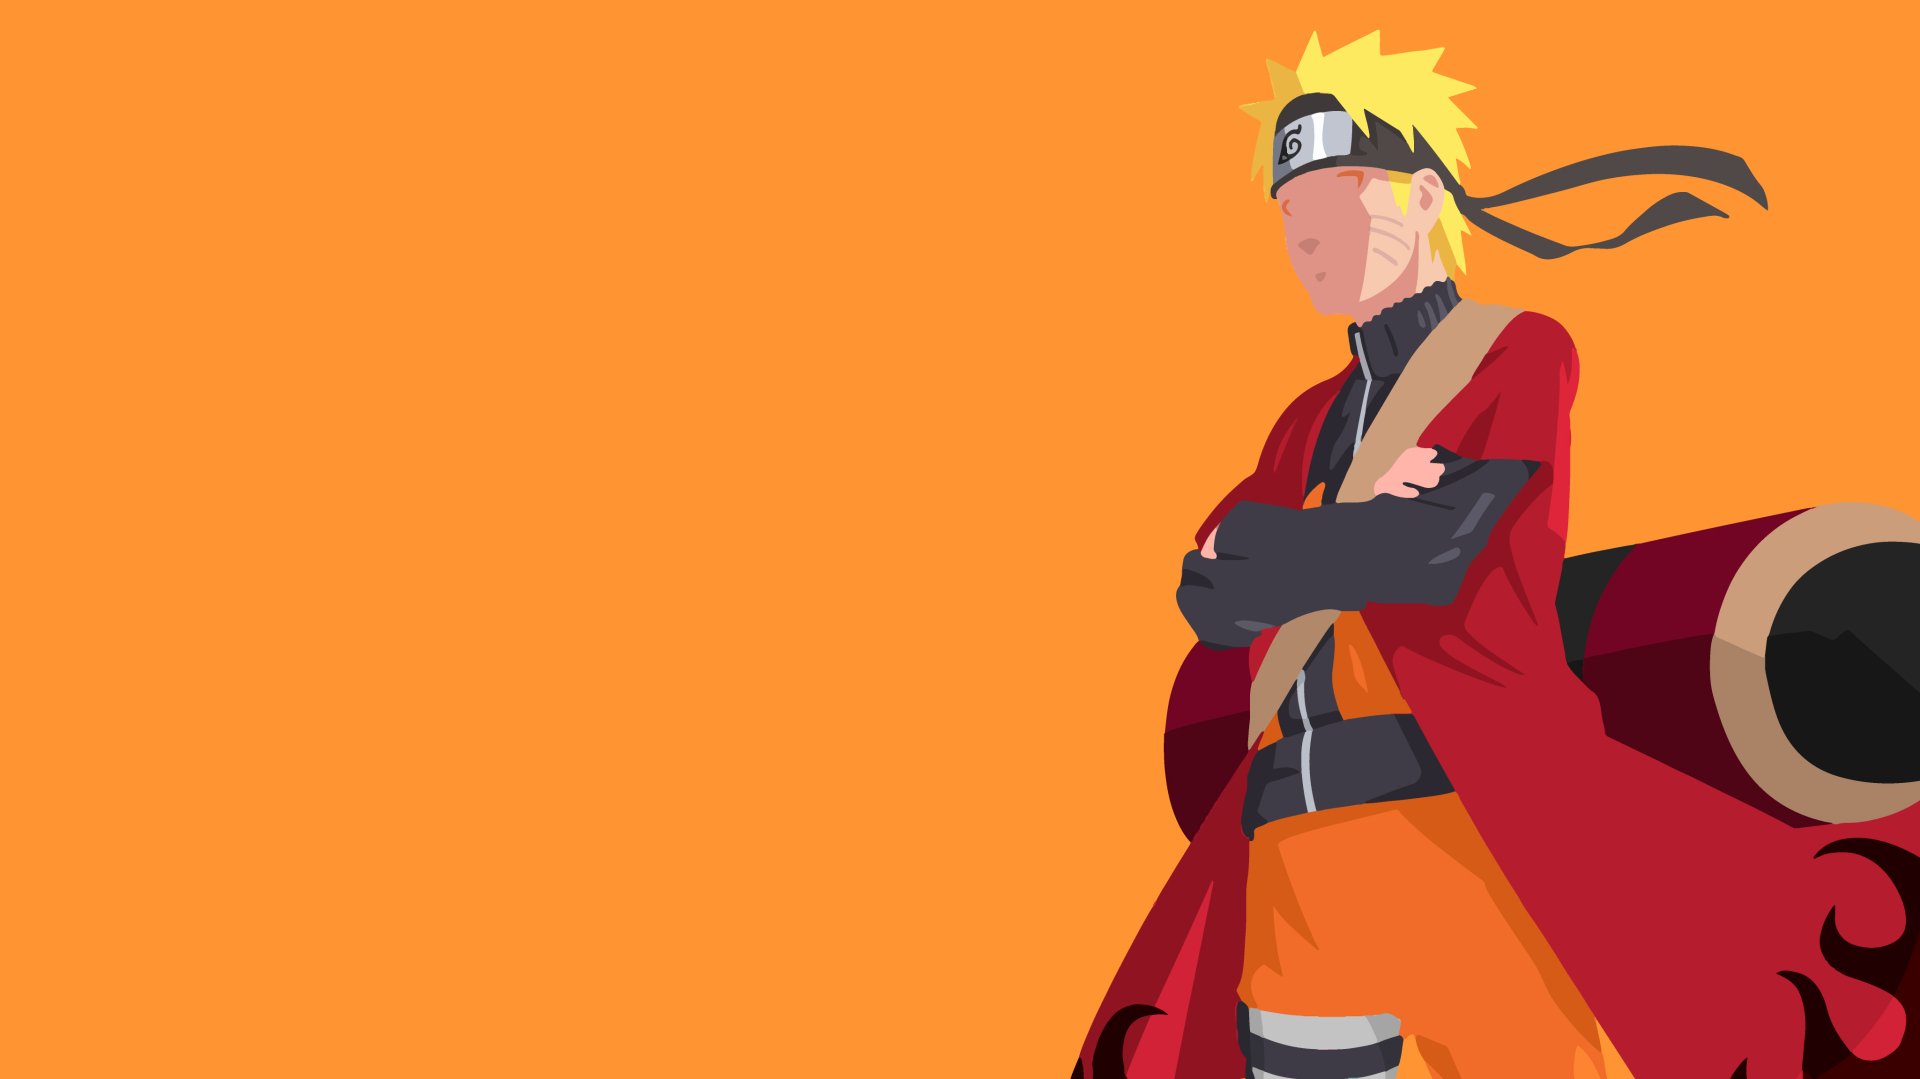 Naruto 4k Ultra HD Wallpaper | Background Image ...